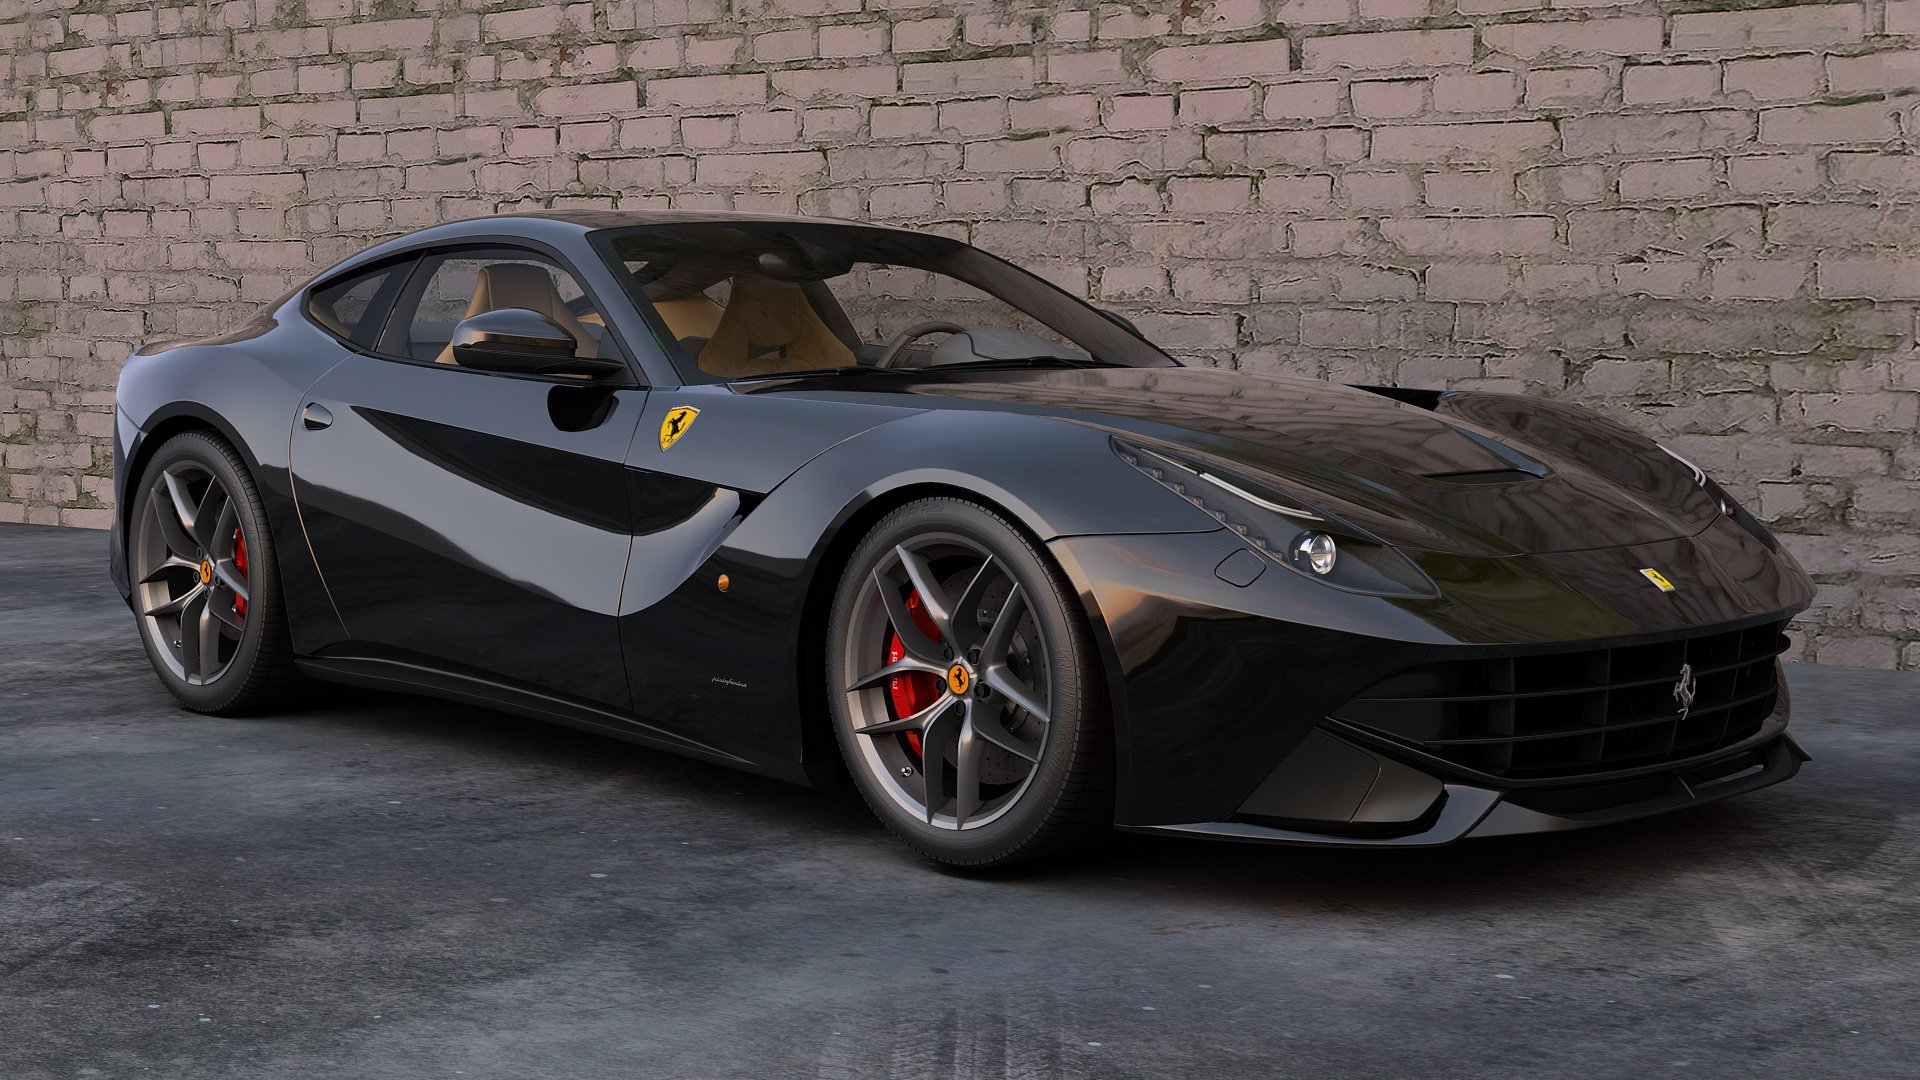 Ferrari F12berlinetta HD Wallpaper | Background Image | 1920x1080